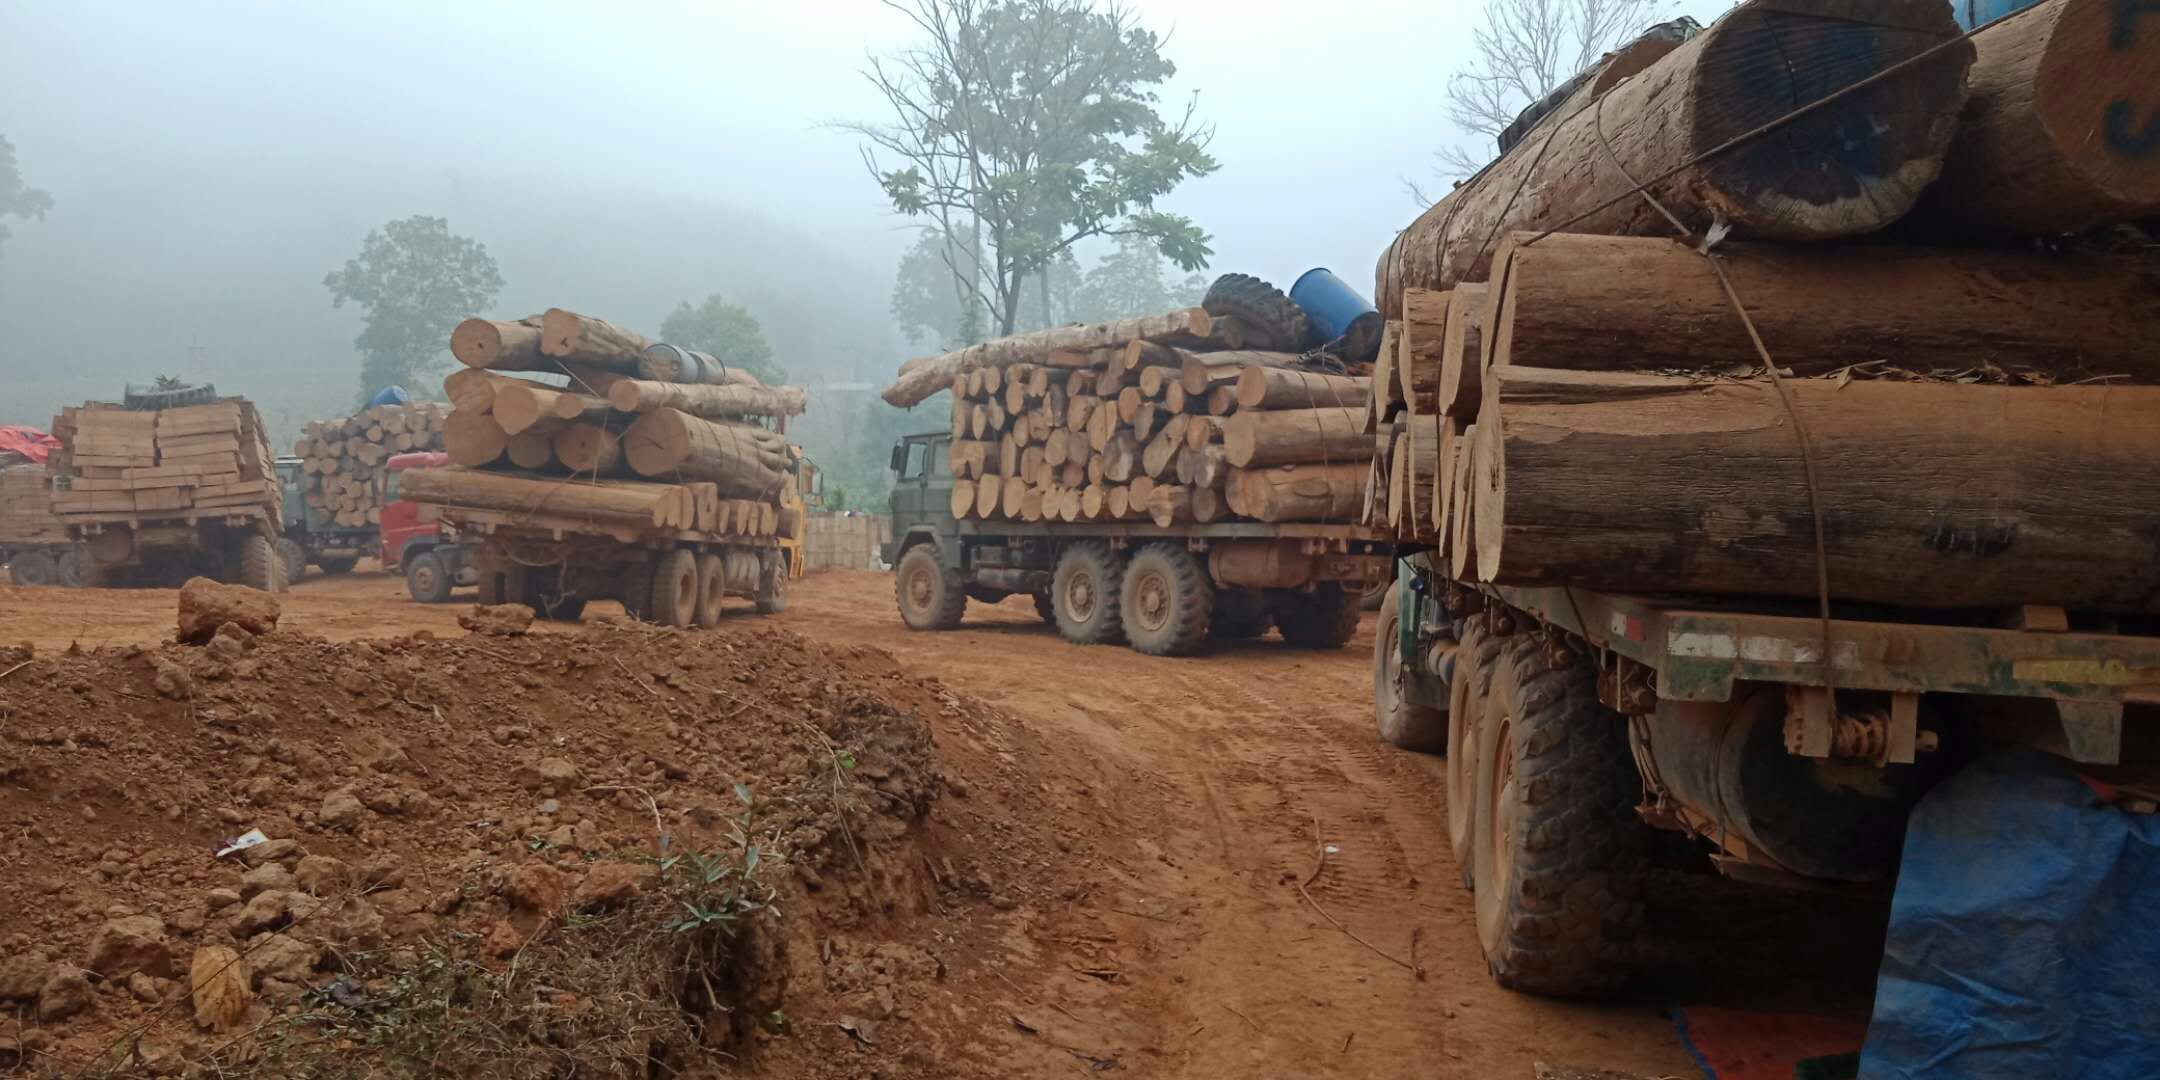 Log trucks